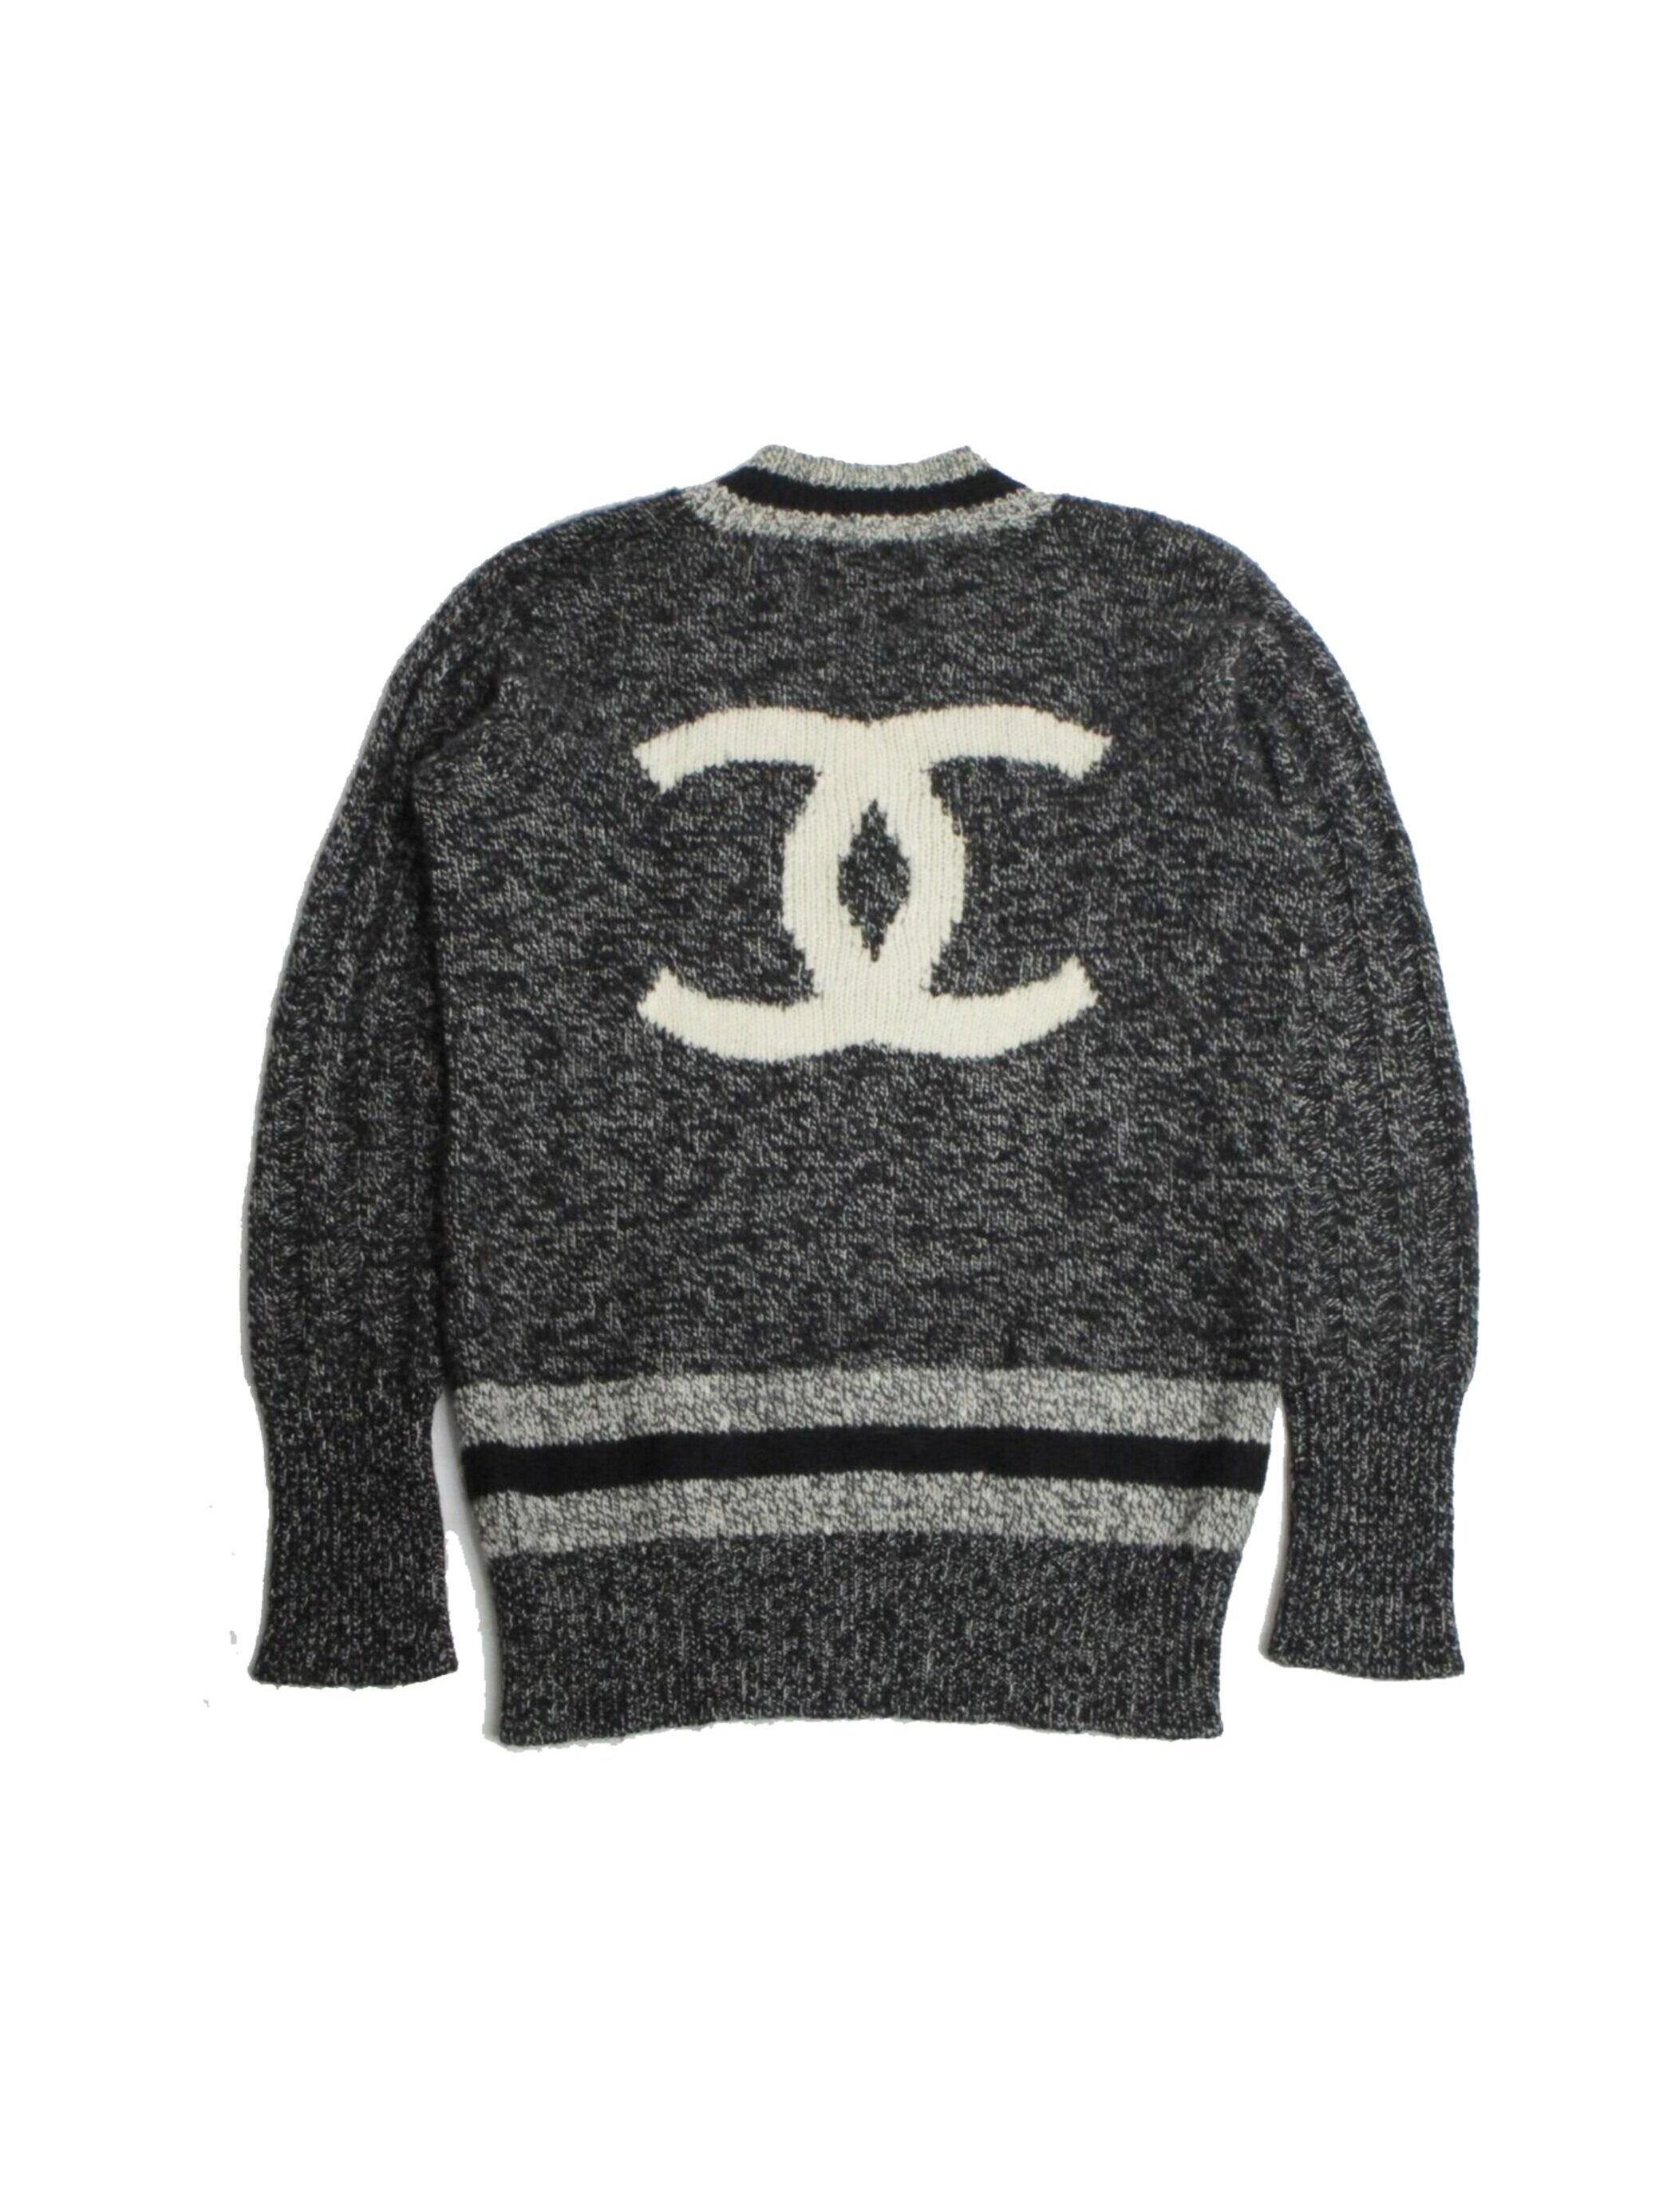 Chanel 1990s Rare Gray Wool CC Sweater